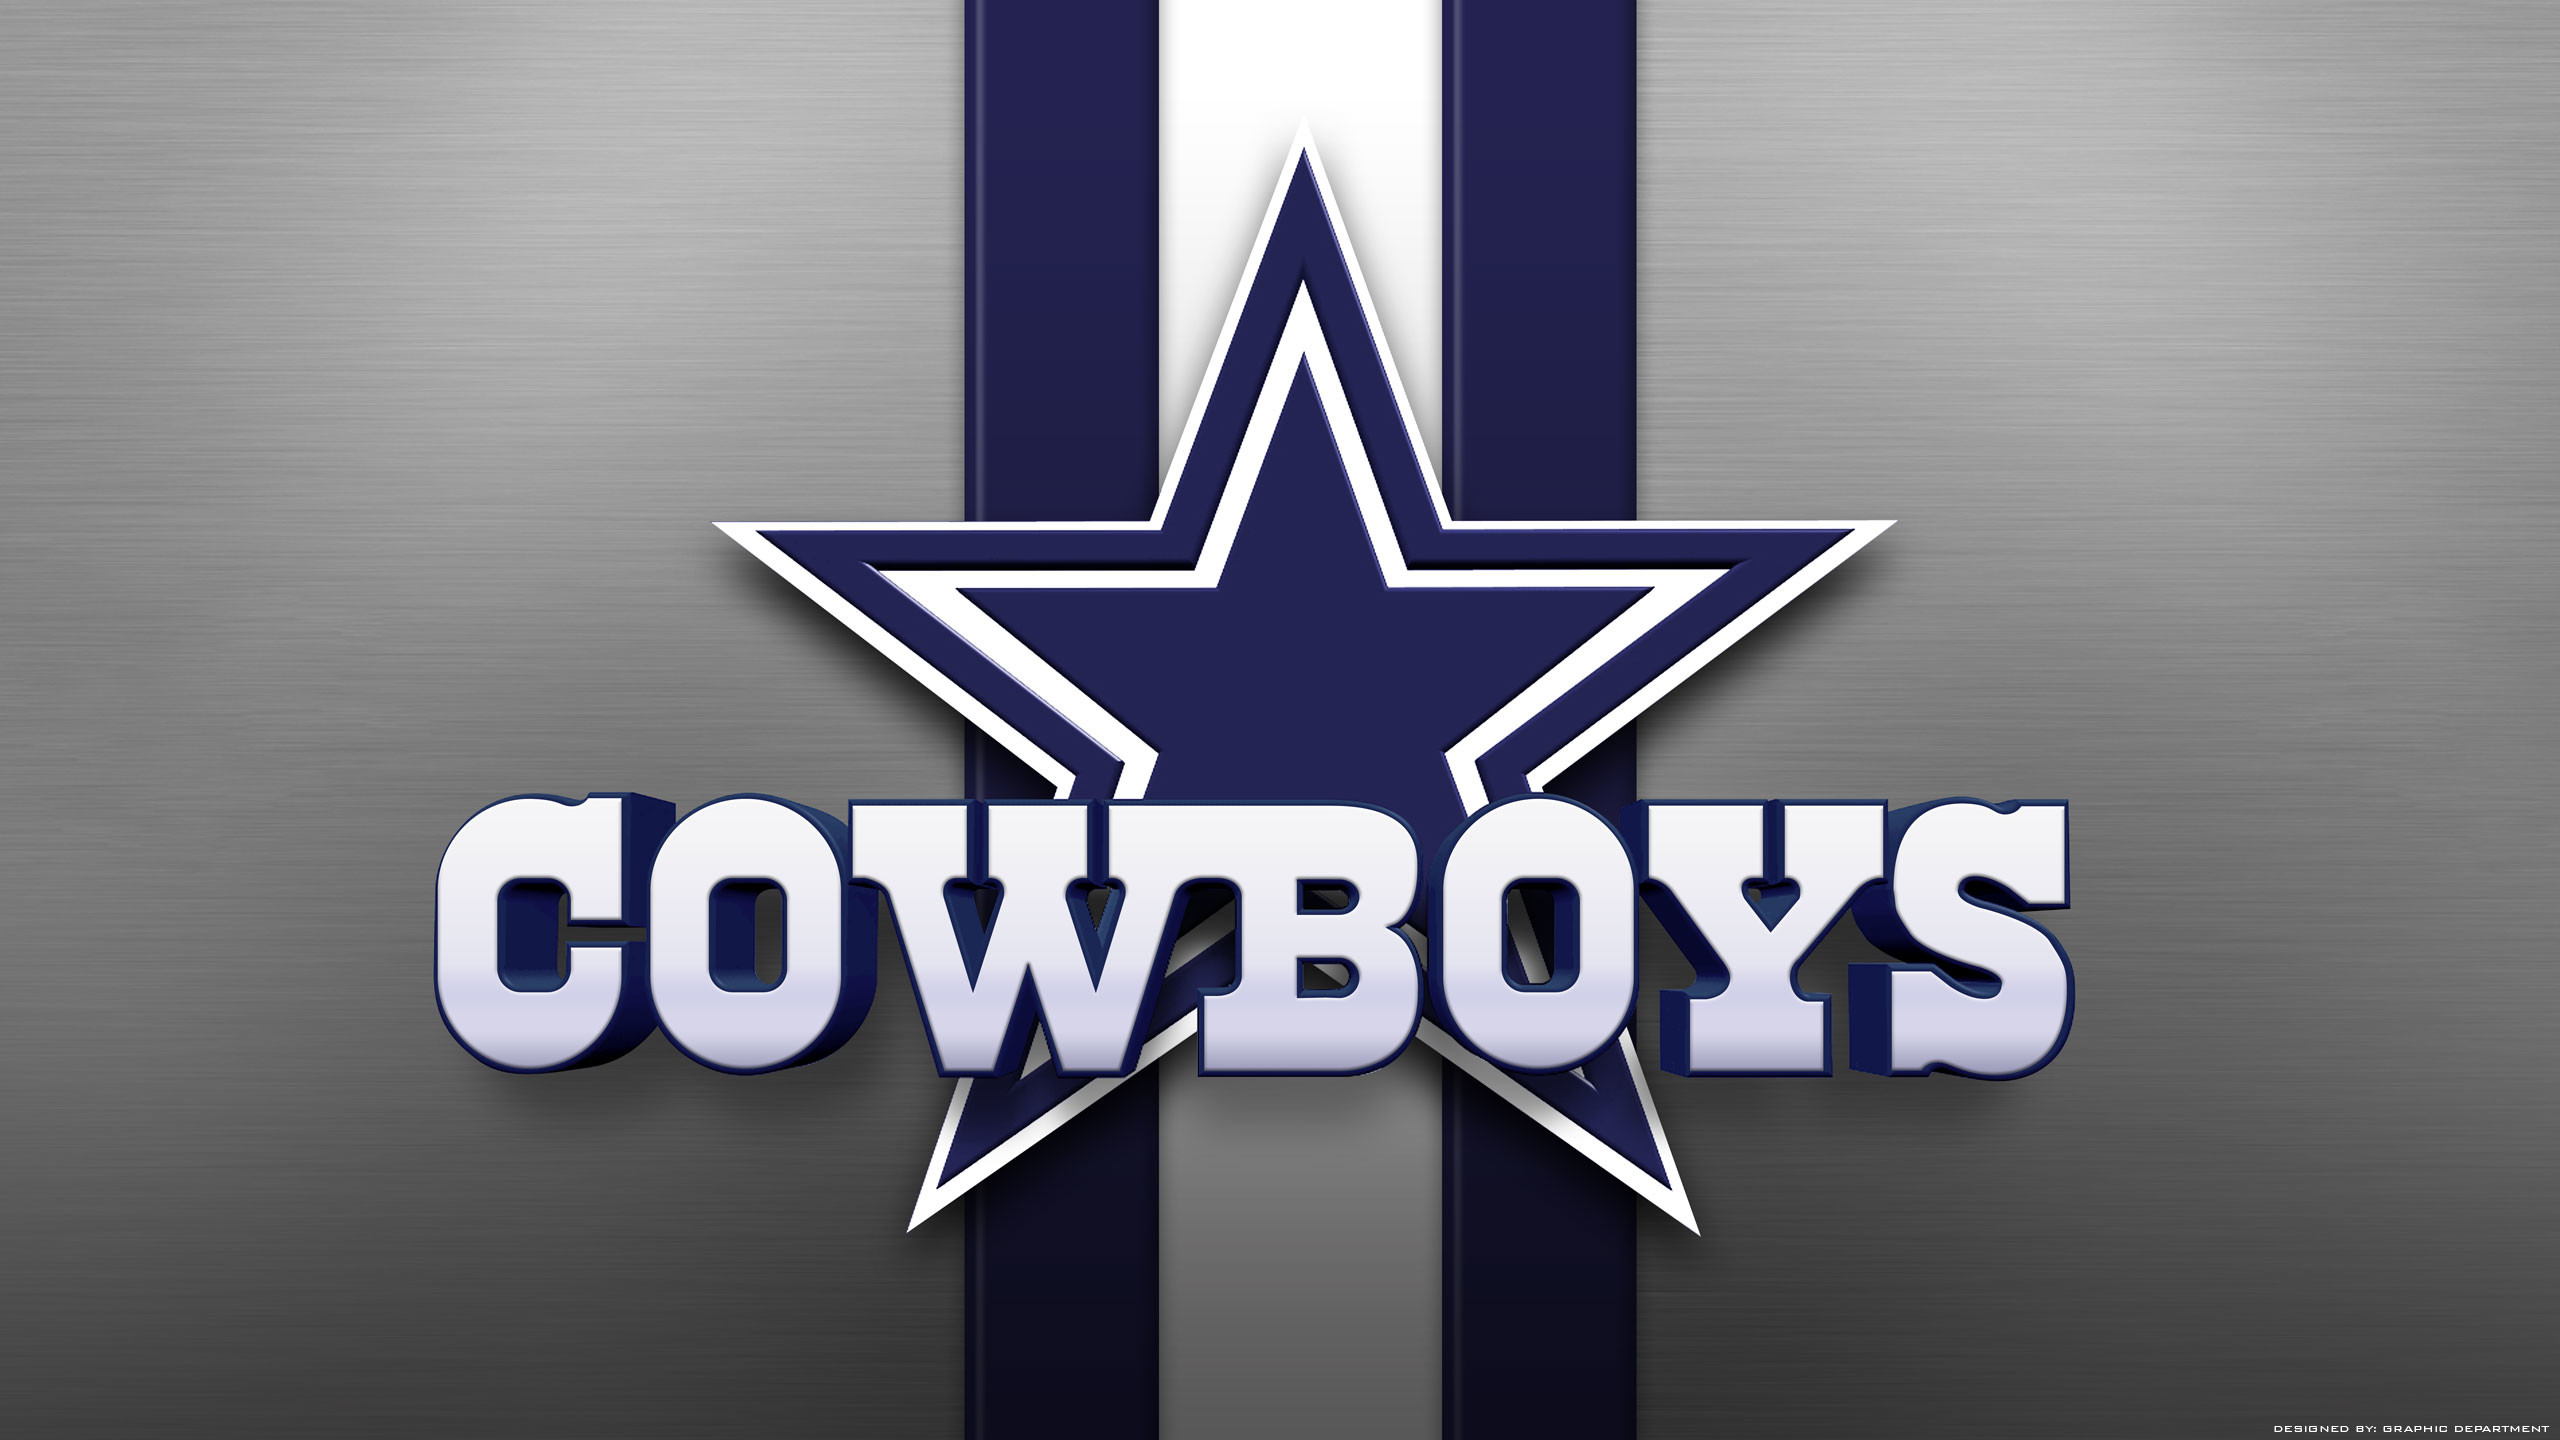 Dallas Cowboys Desktop Wallpaper The Best Image In